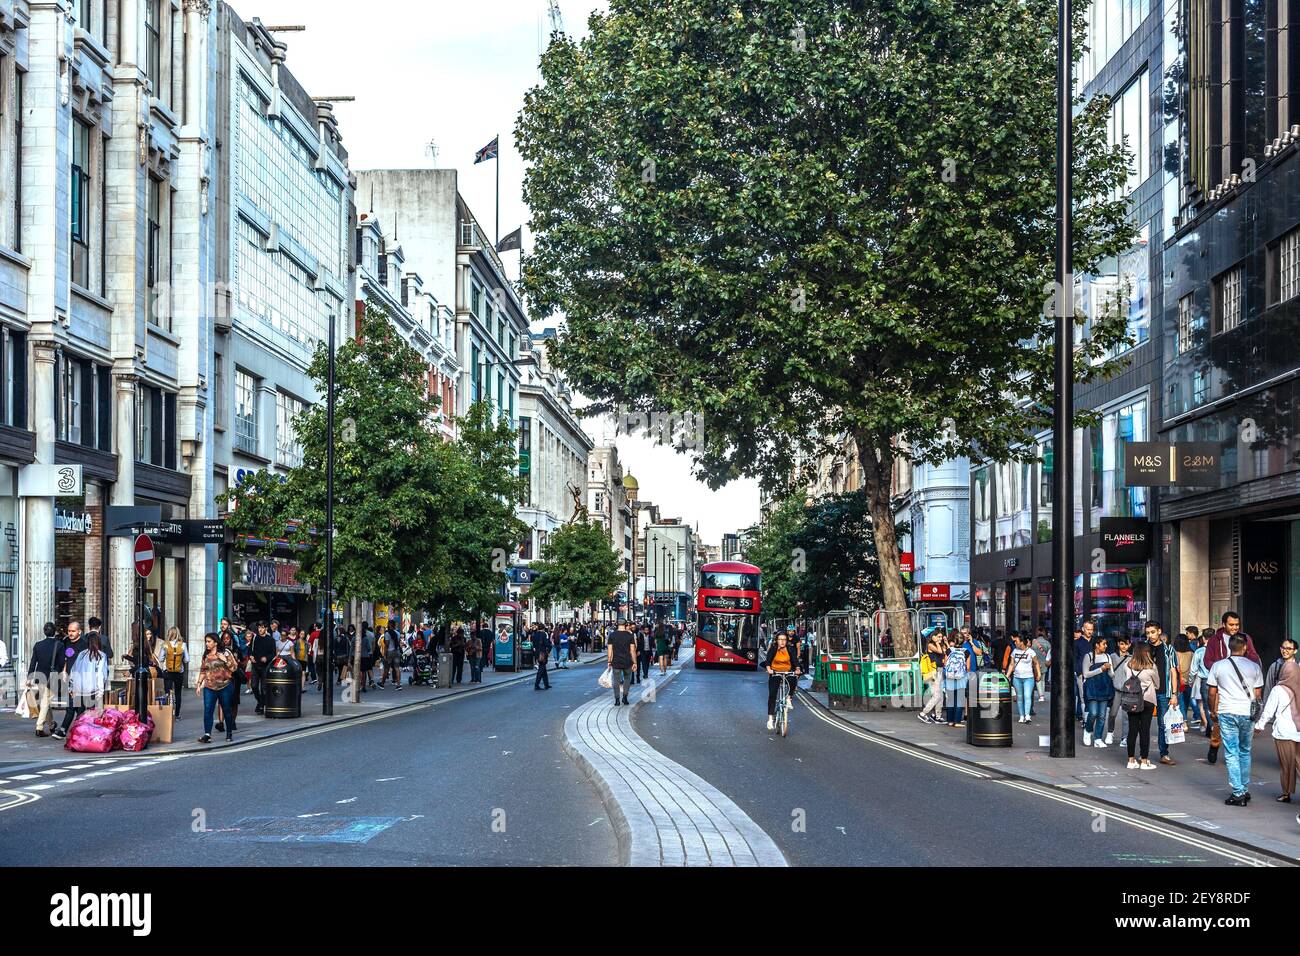 Oxford Street scene, Central London, England, UK. Stock Photo